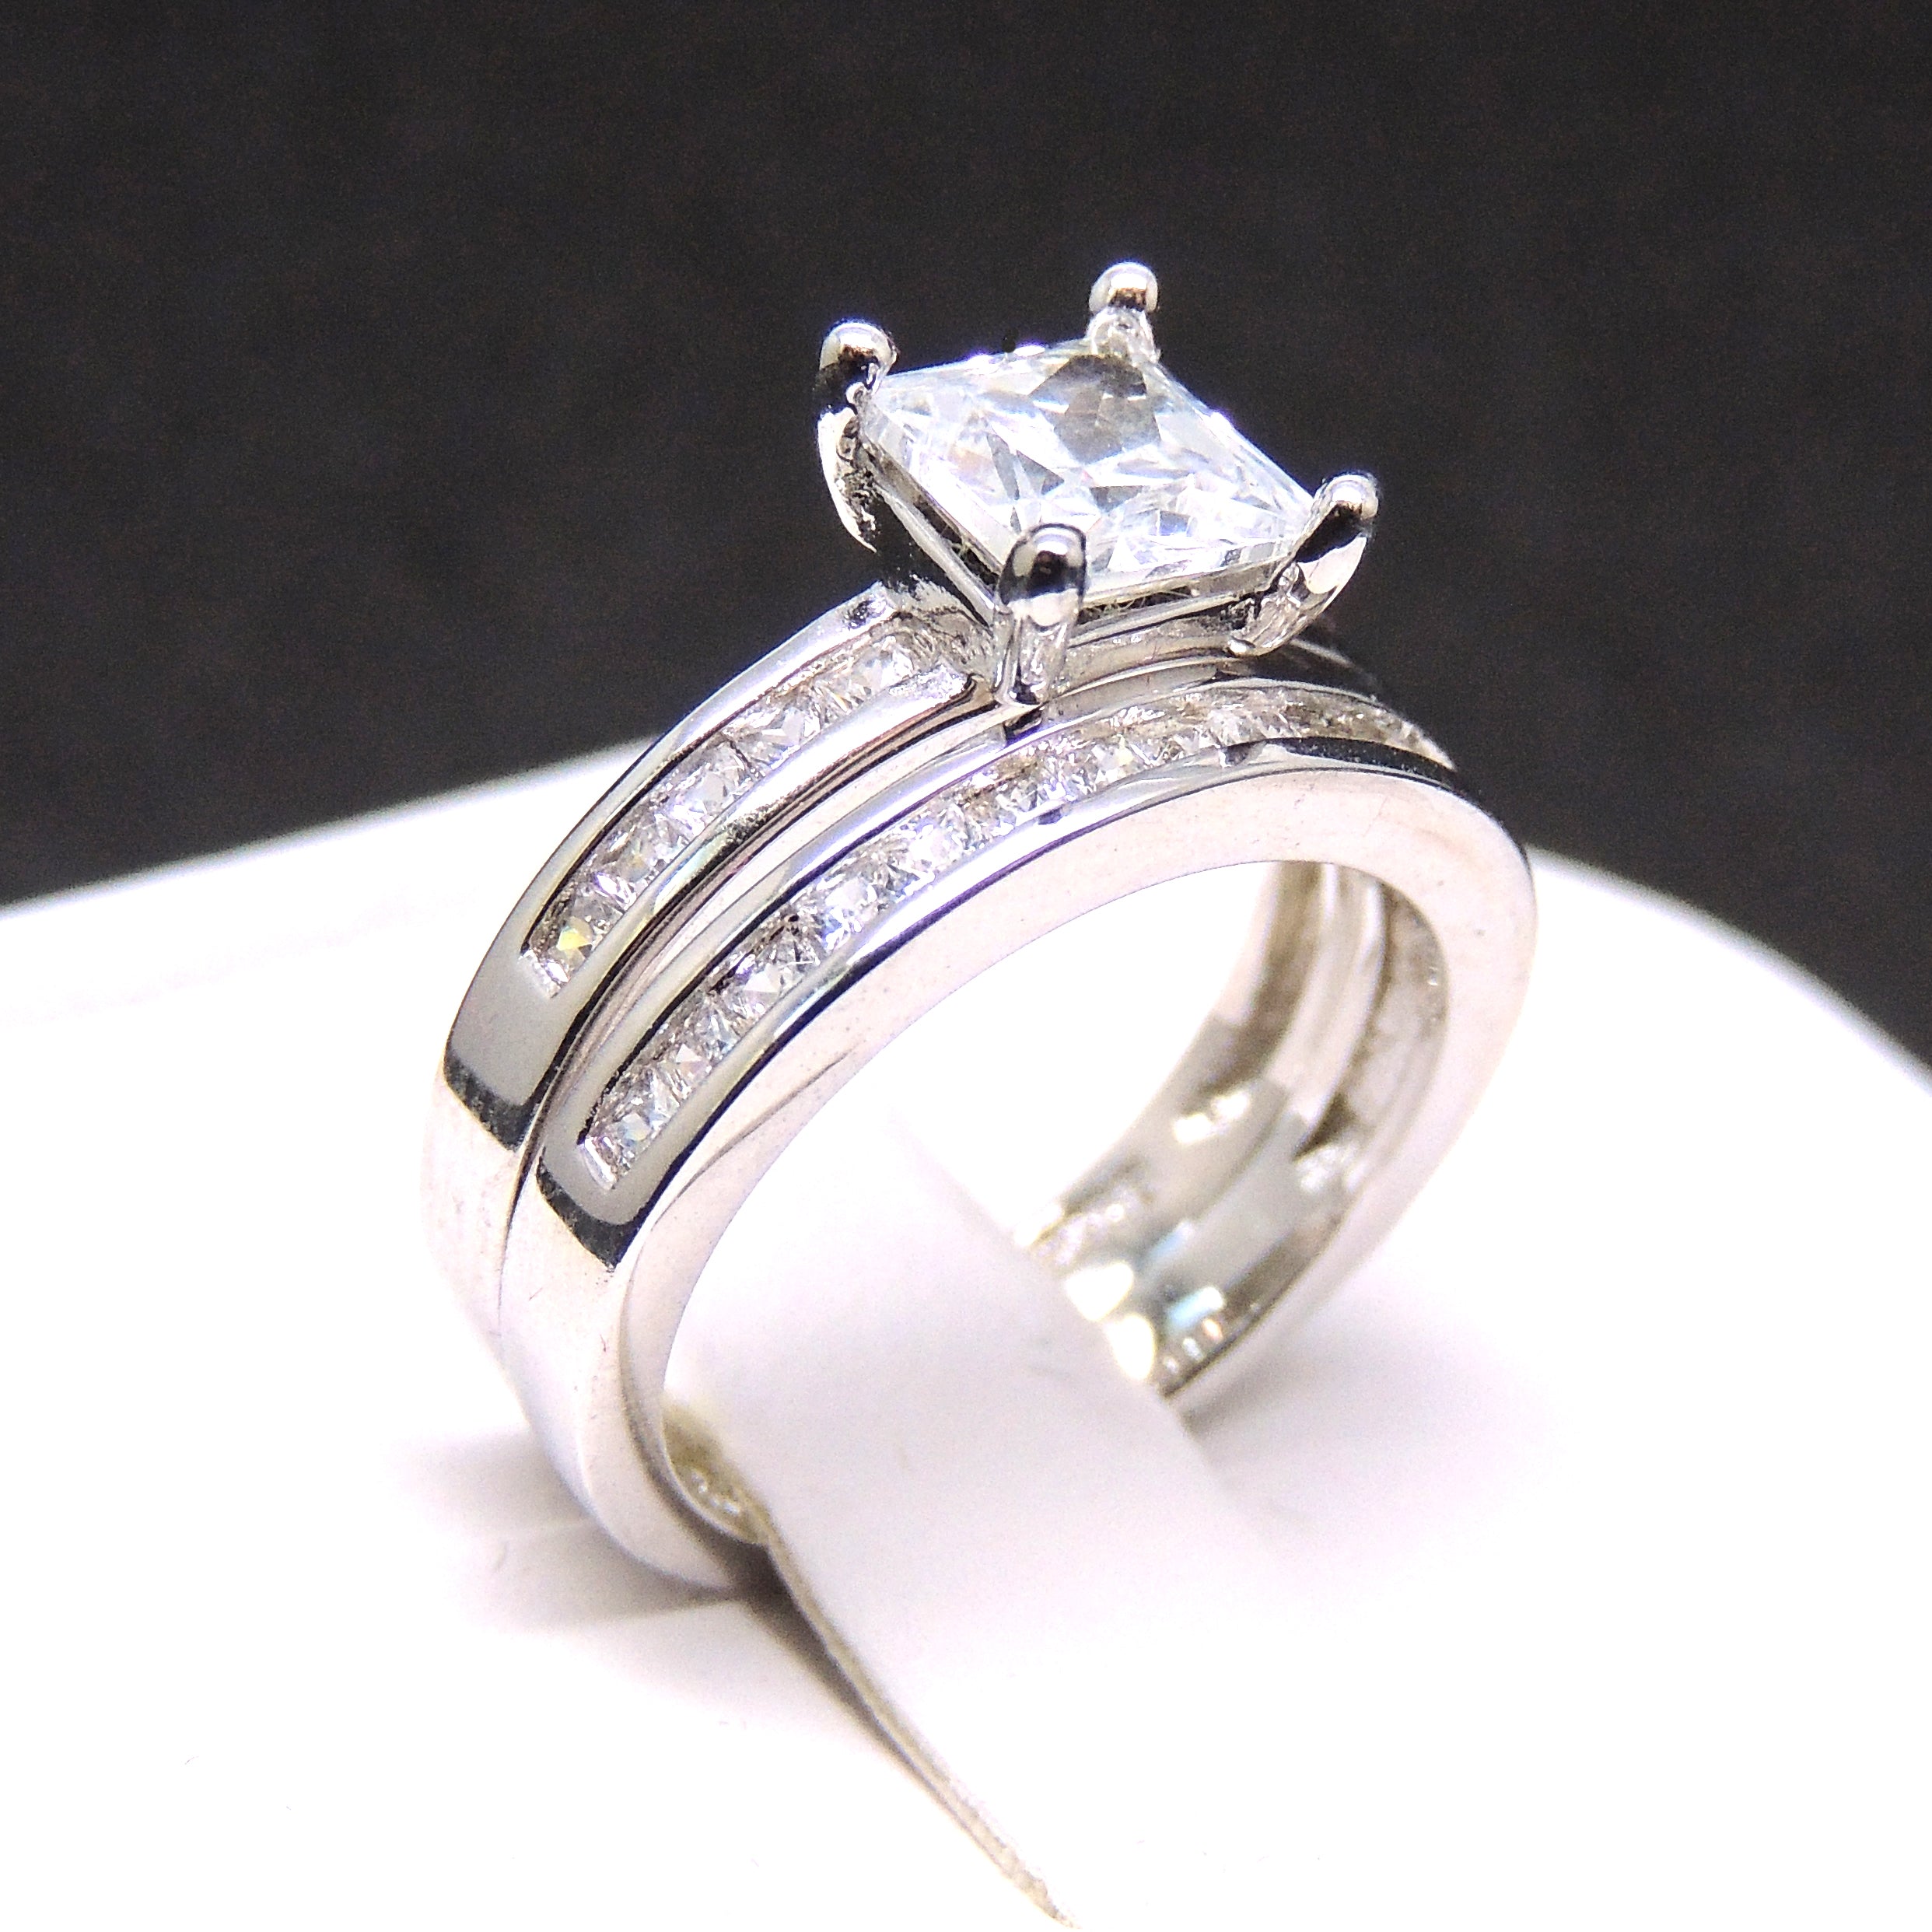 Kristie Bridal Set Princess Cut Cz Engagement Ring Womens Ginger Lyne Collection - 10